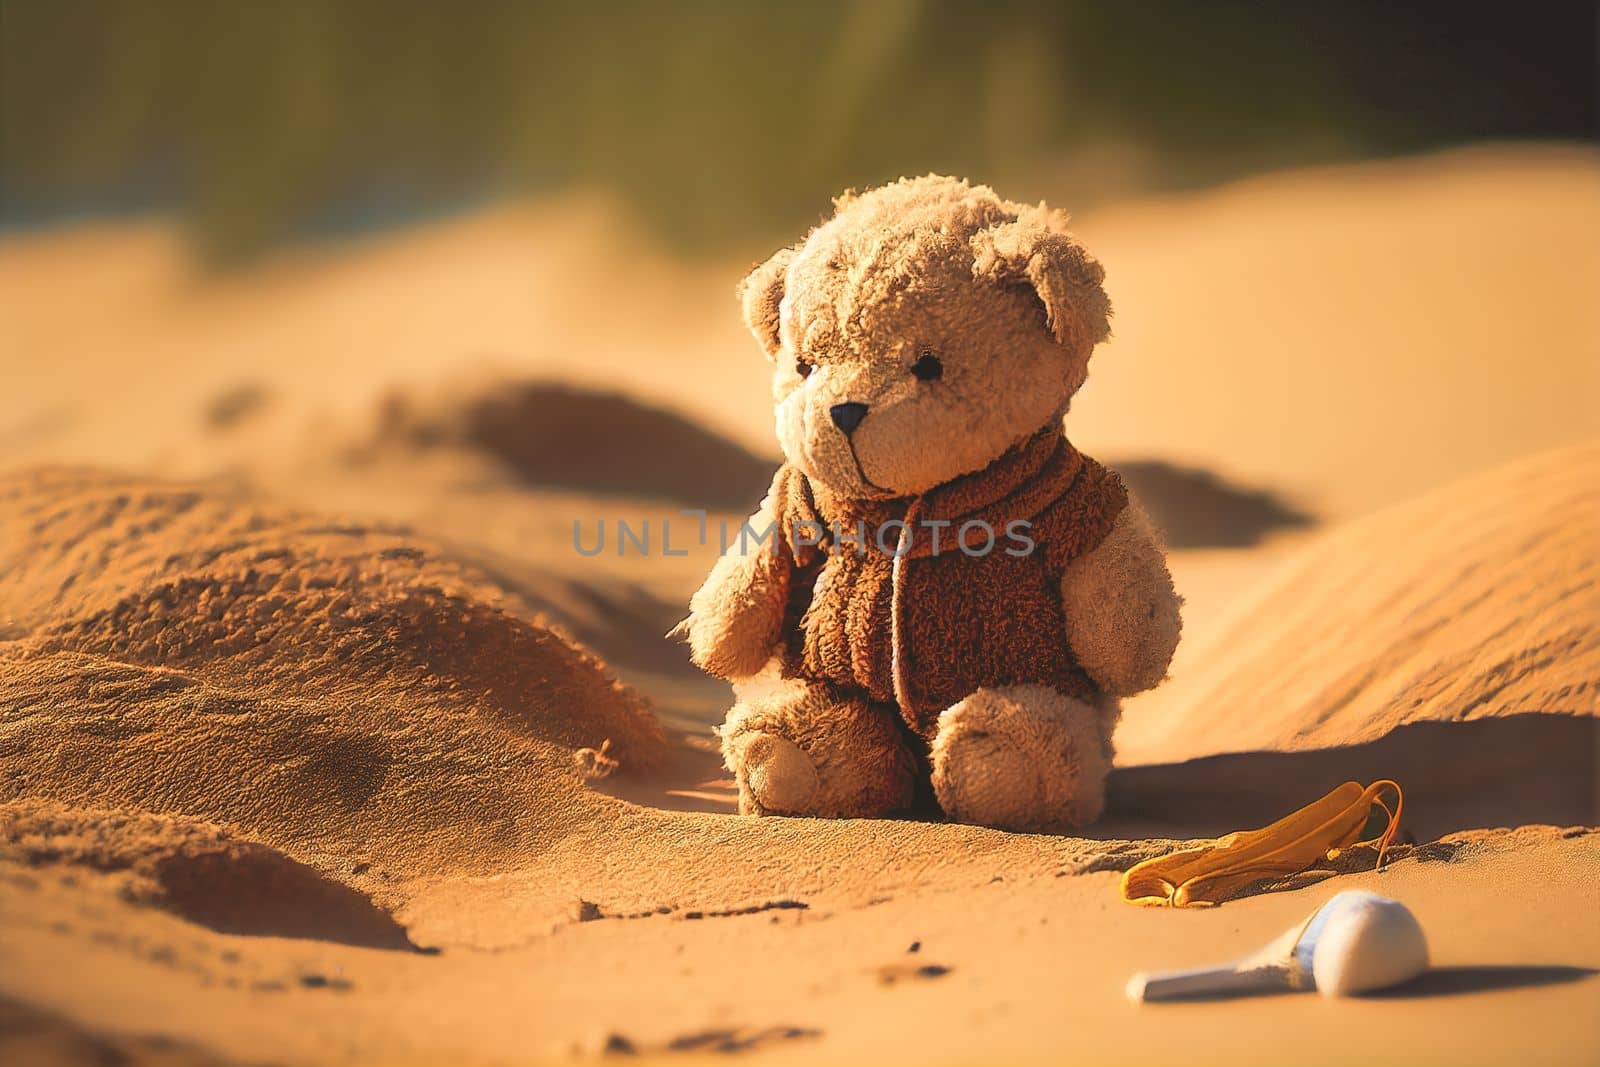 A small brown teddy bear on a sandy beach against a blue ocean and bright sun background. by FokasuArt